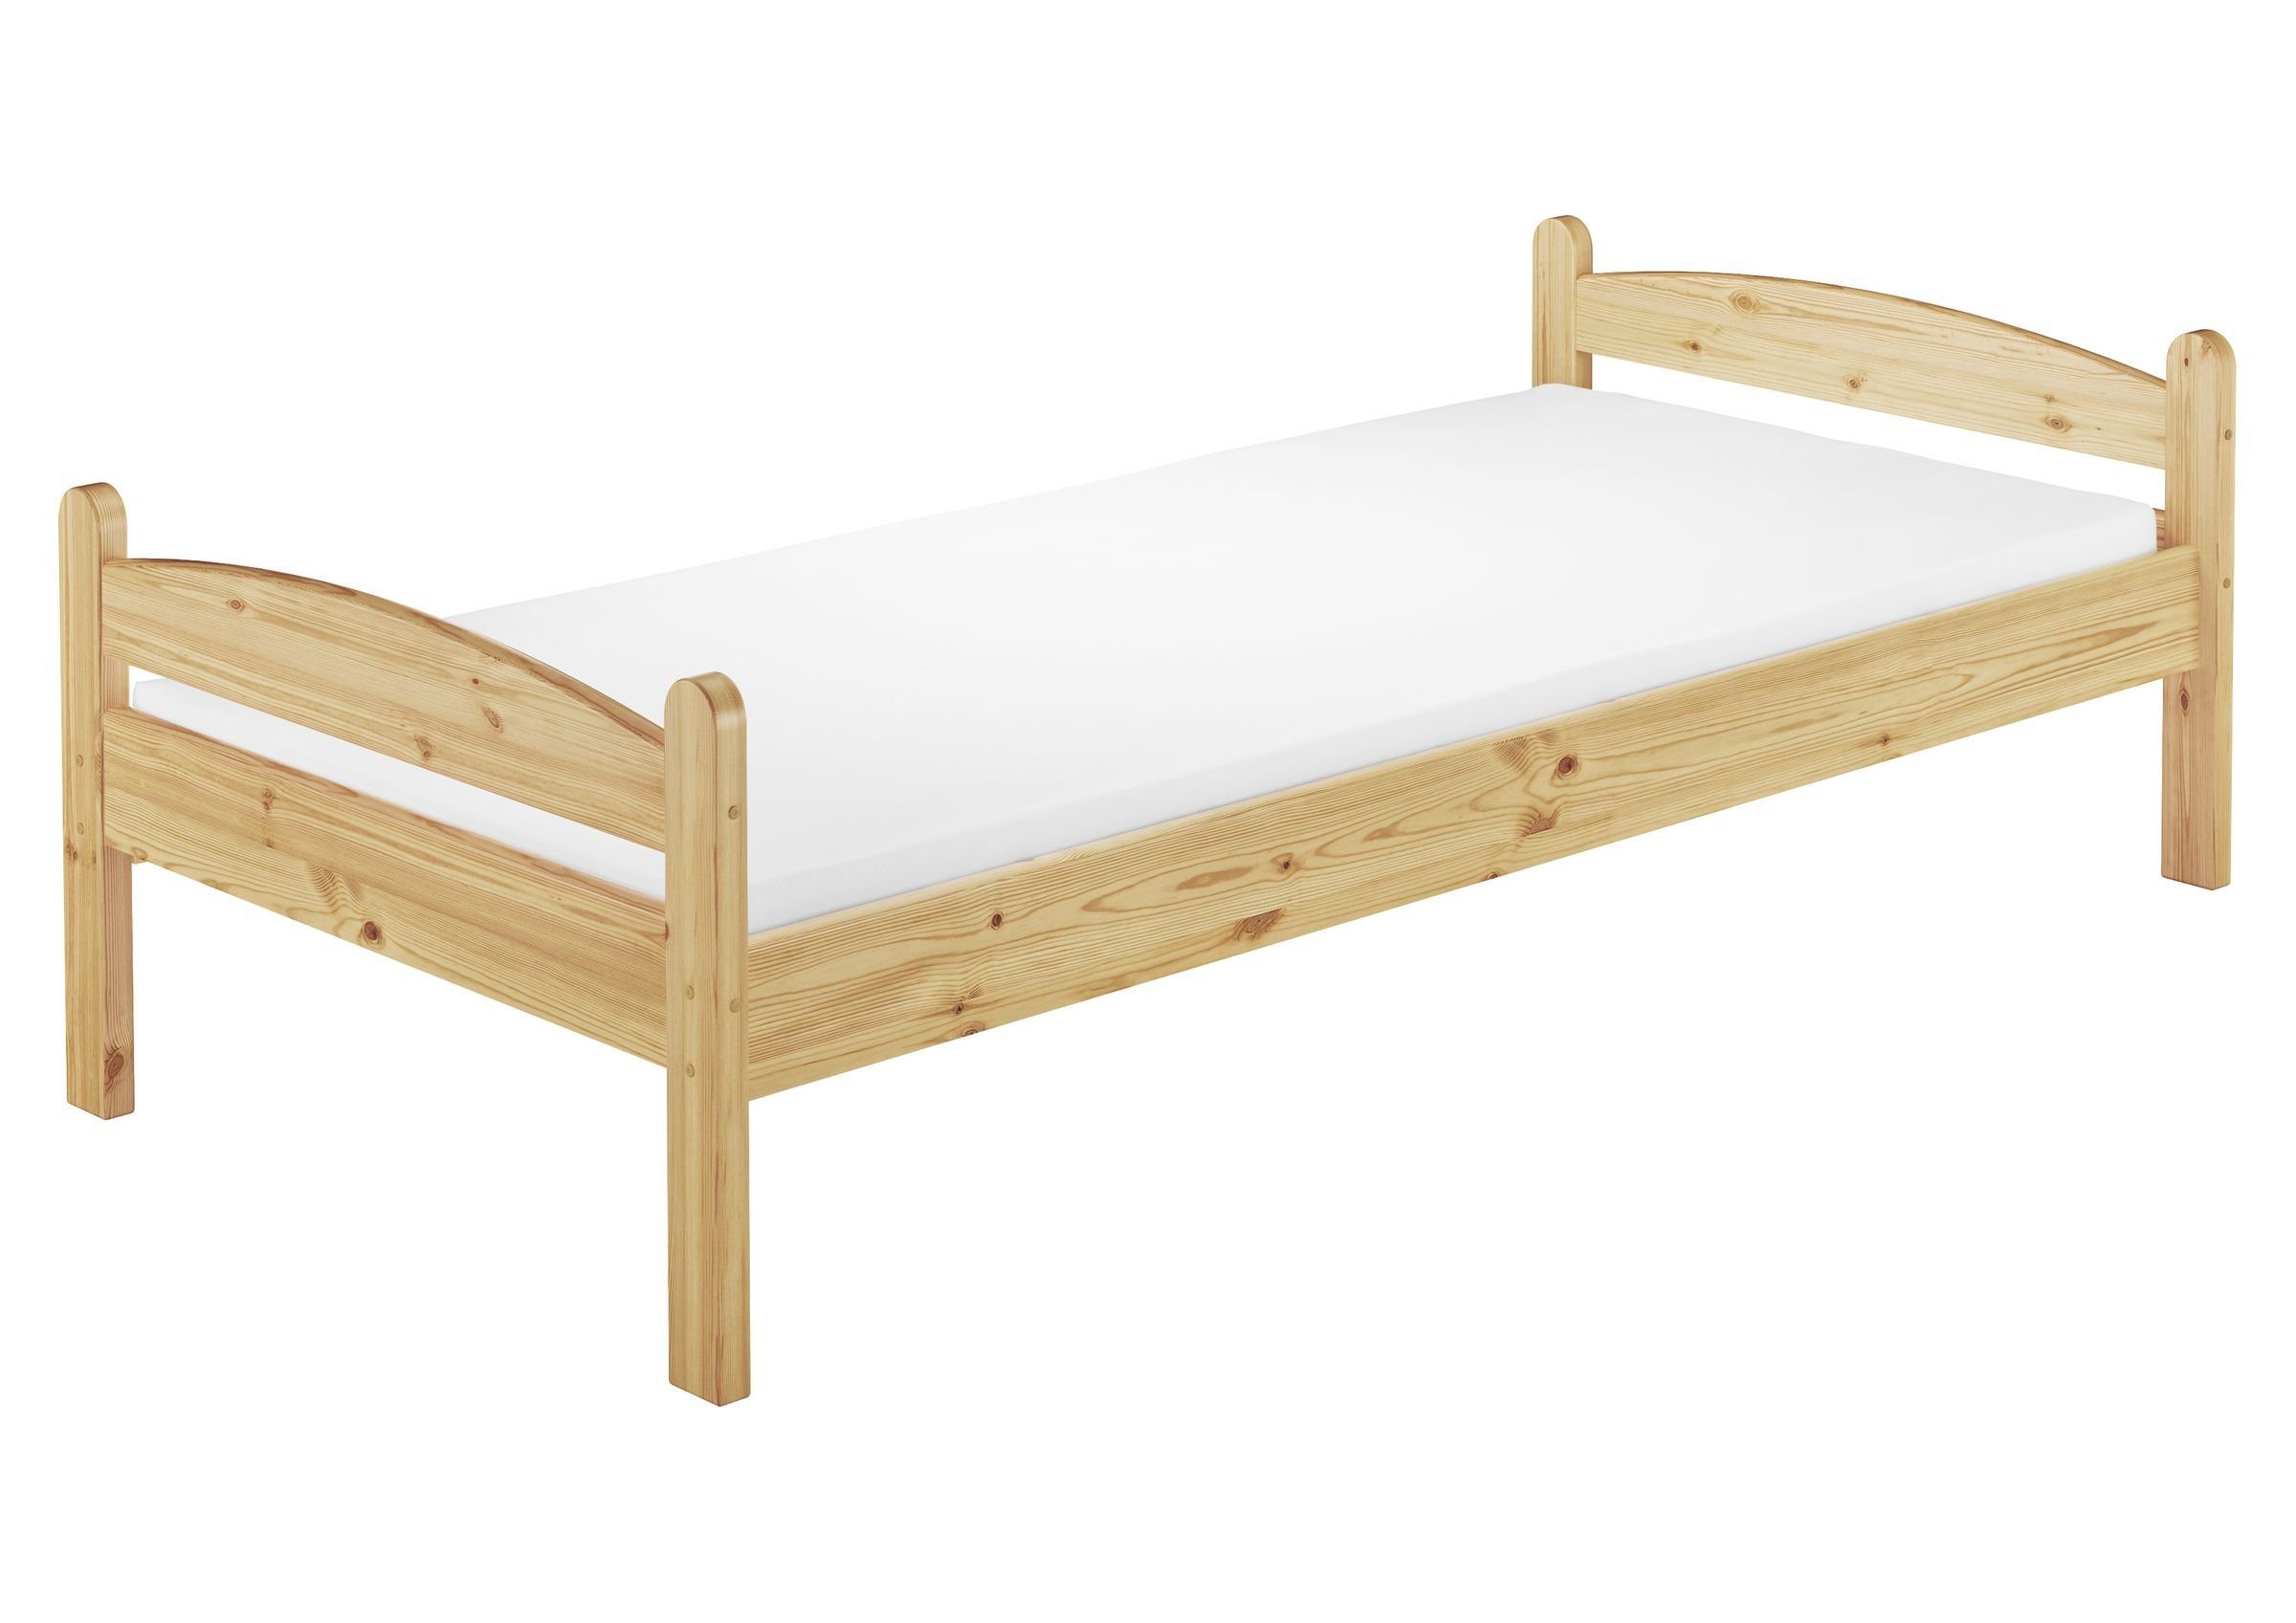 ERST-HOLZ Bett Bettenset mit Holzgestell, Rost und Matratze 100x200, Kieferfarblos lackiert | Bettgestelle